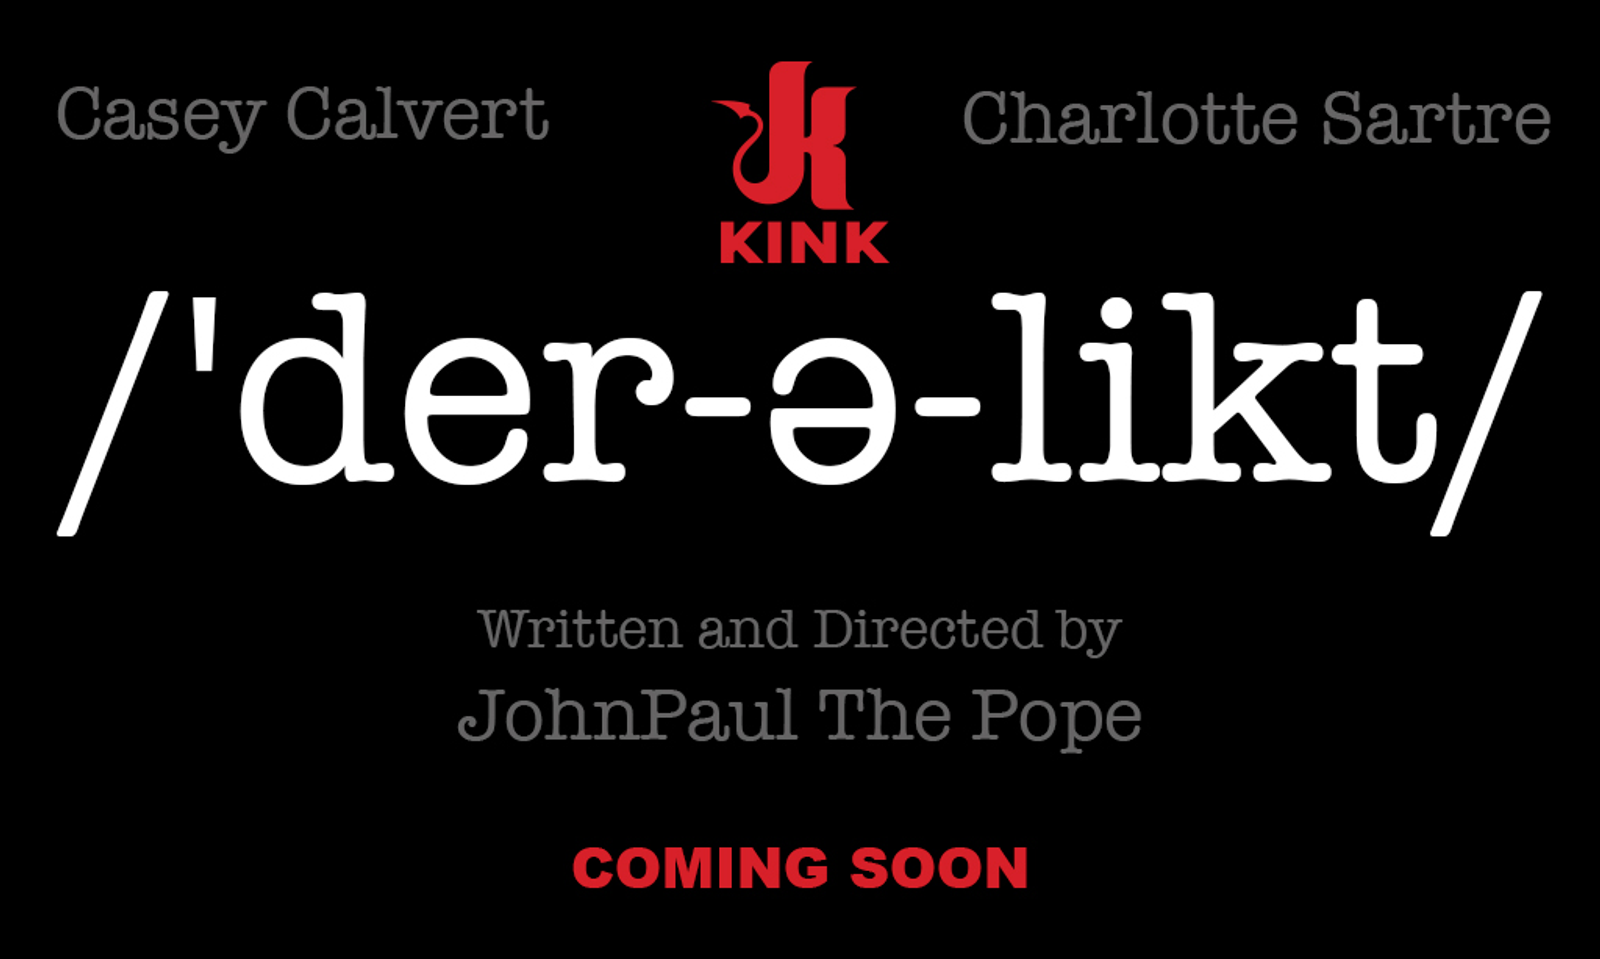 Kink Director JohnPaul the Pope Prepping New Thriller 'Derelikt'